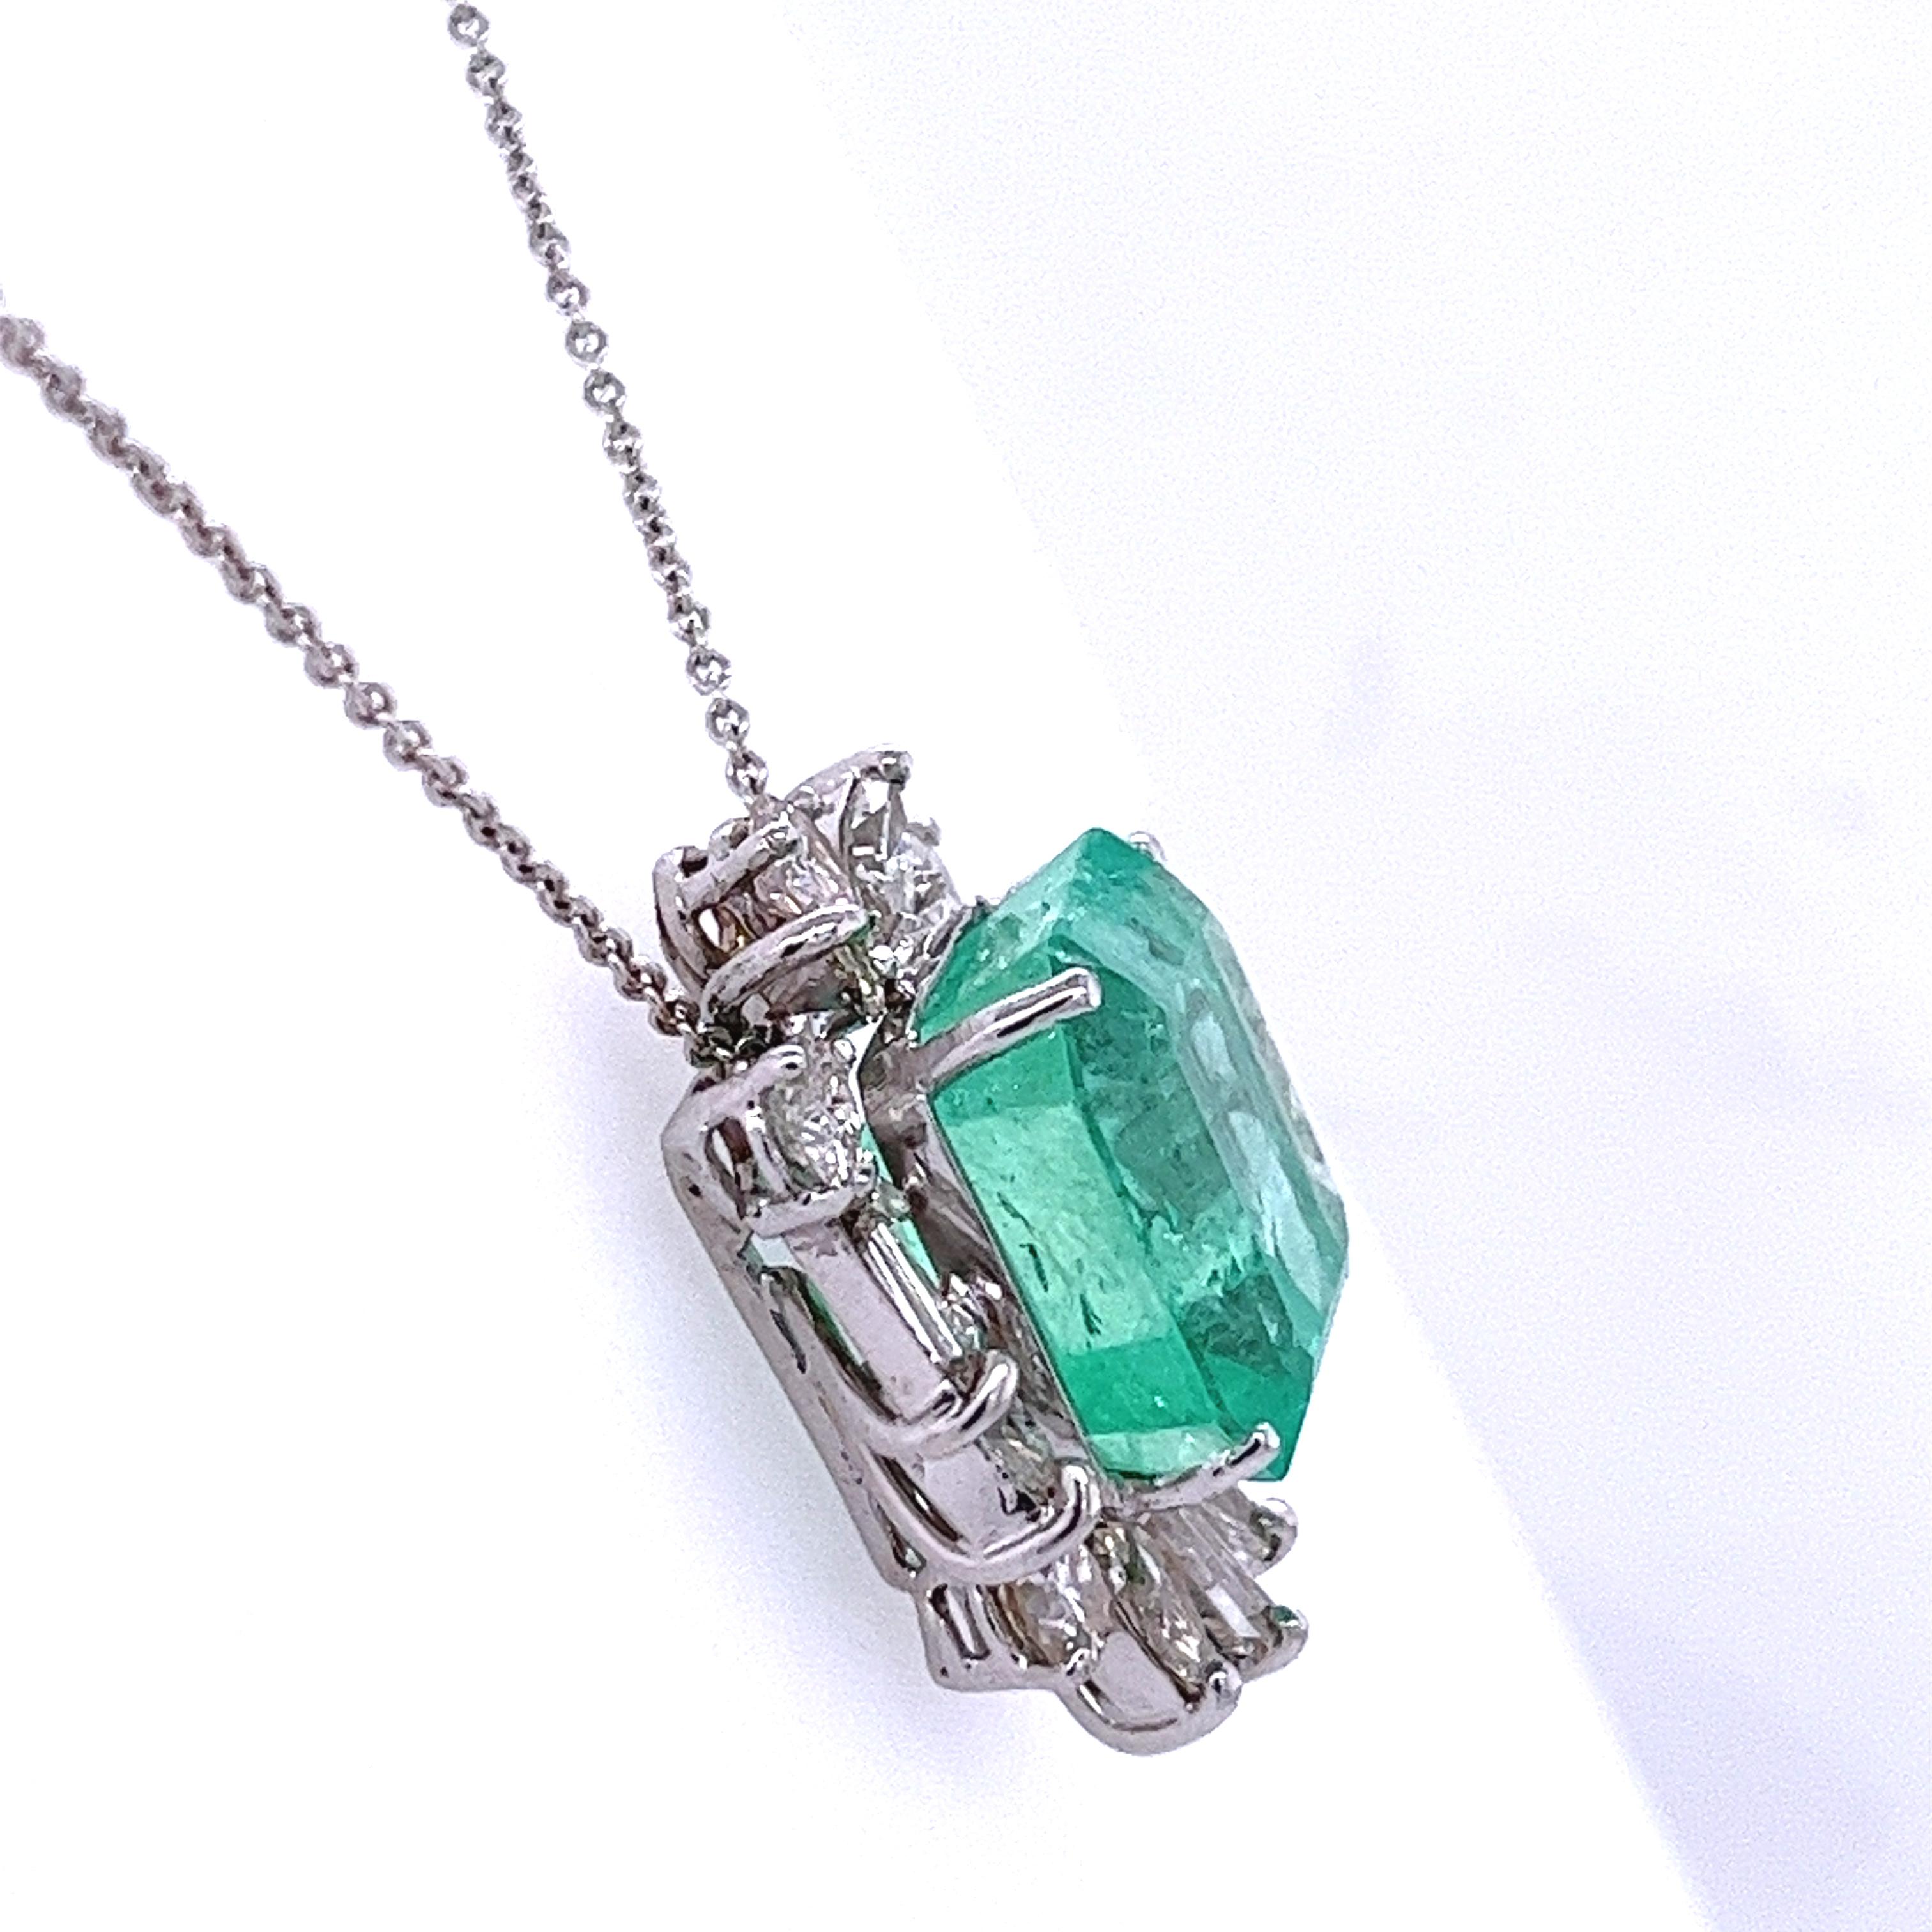 11.54 Carat Colombian Emerald and Baguette Cut Diamonds Pendant Set in Platinum 5